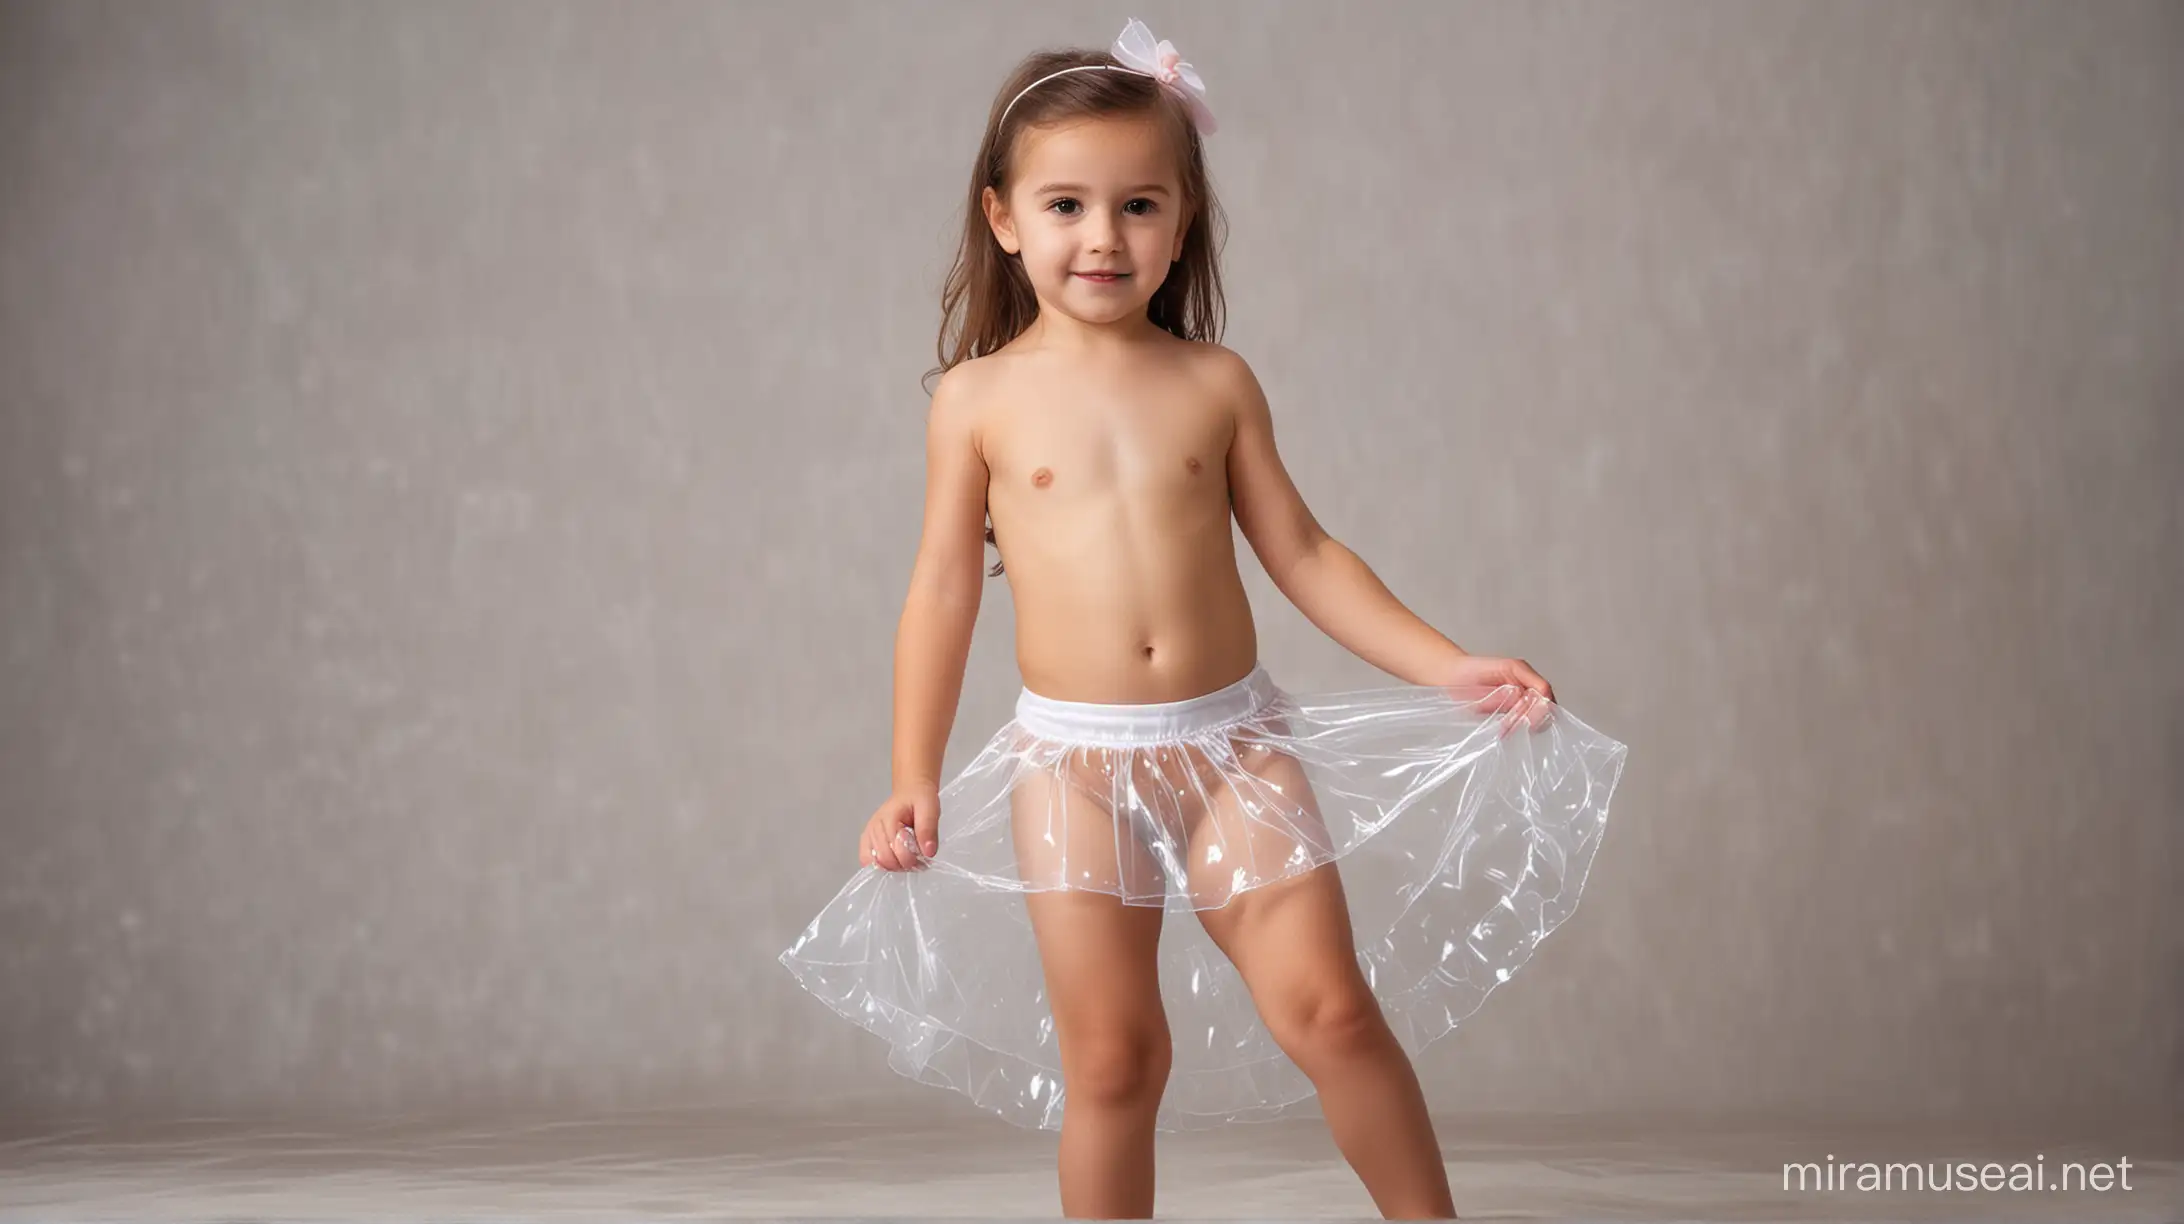 Little cute girl topless in transparente skirt